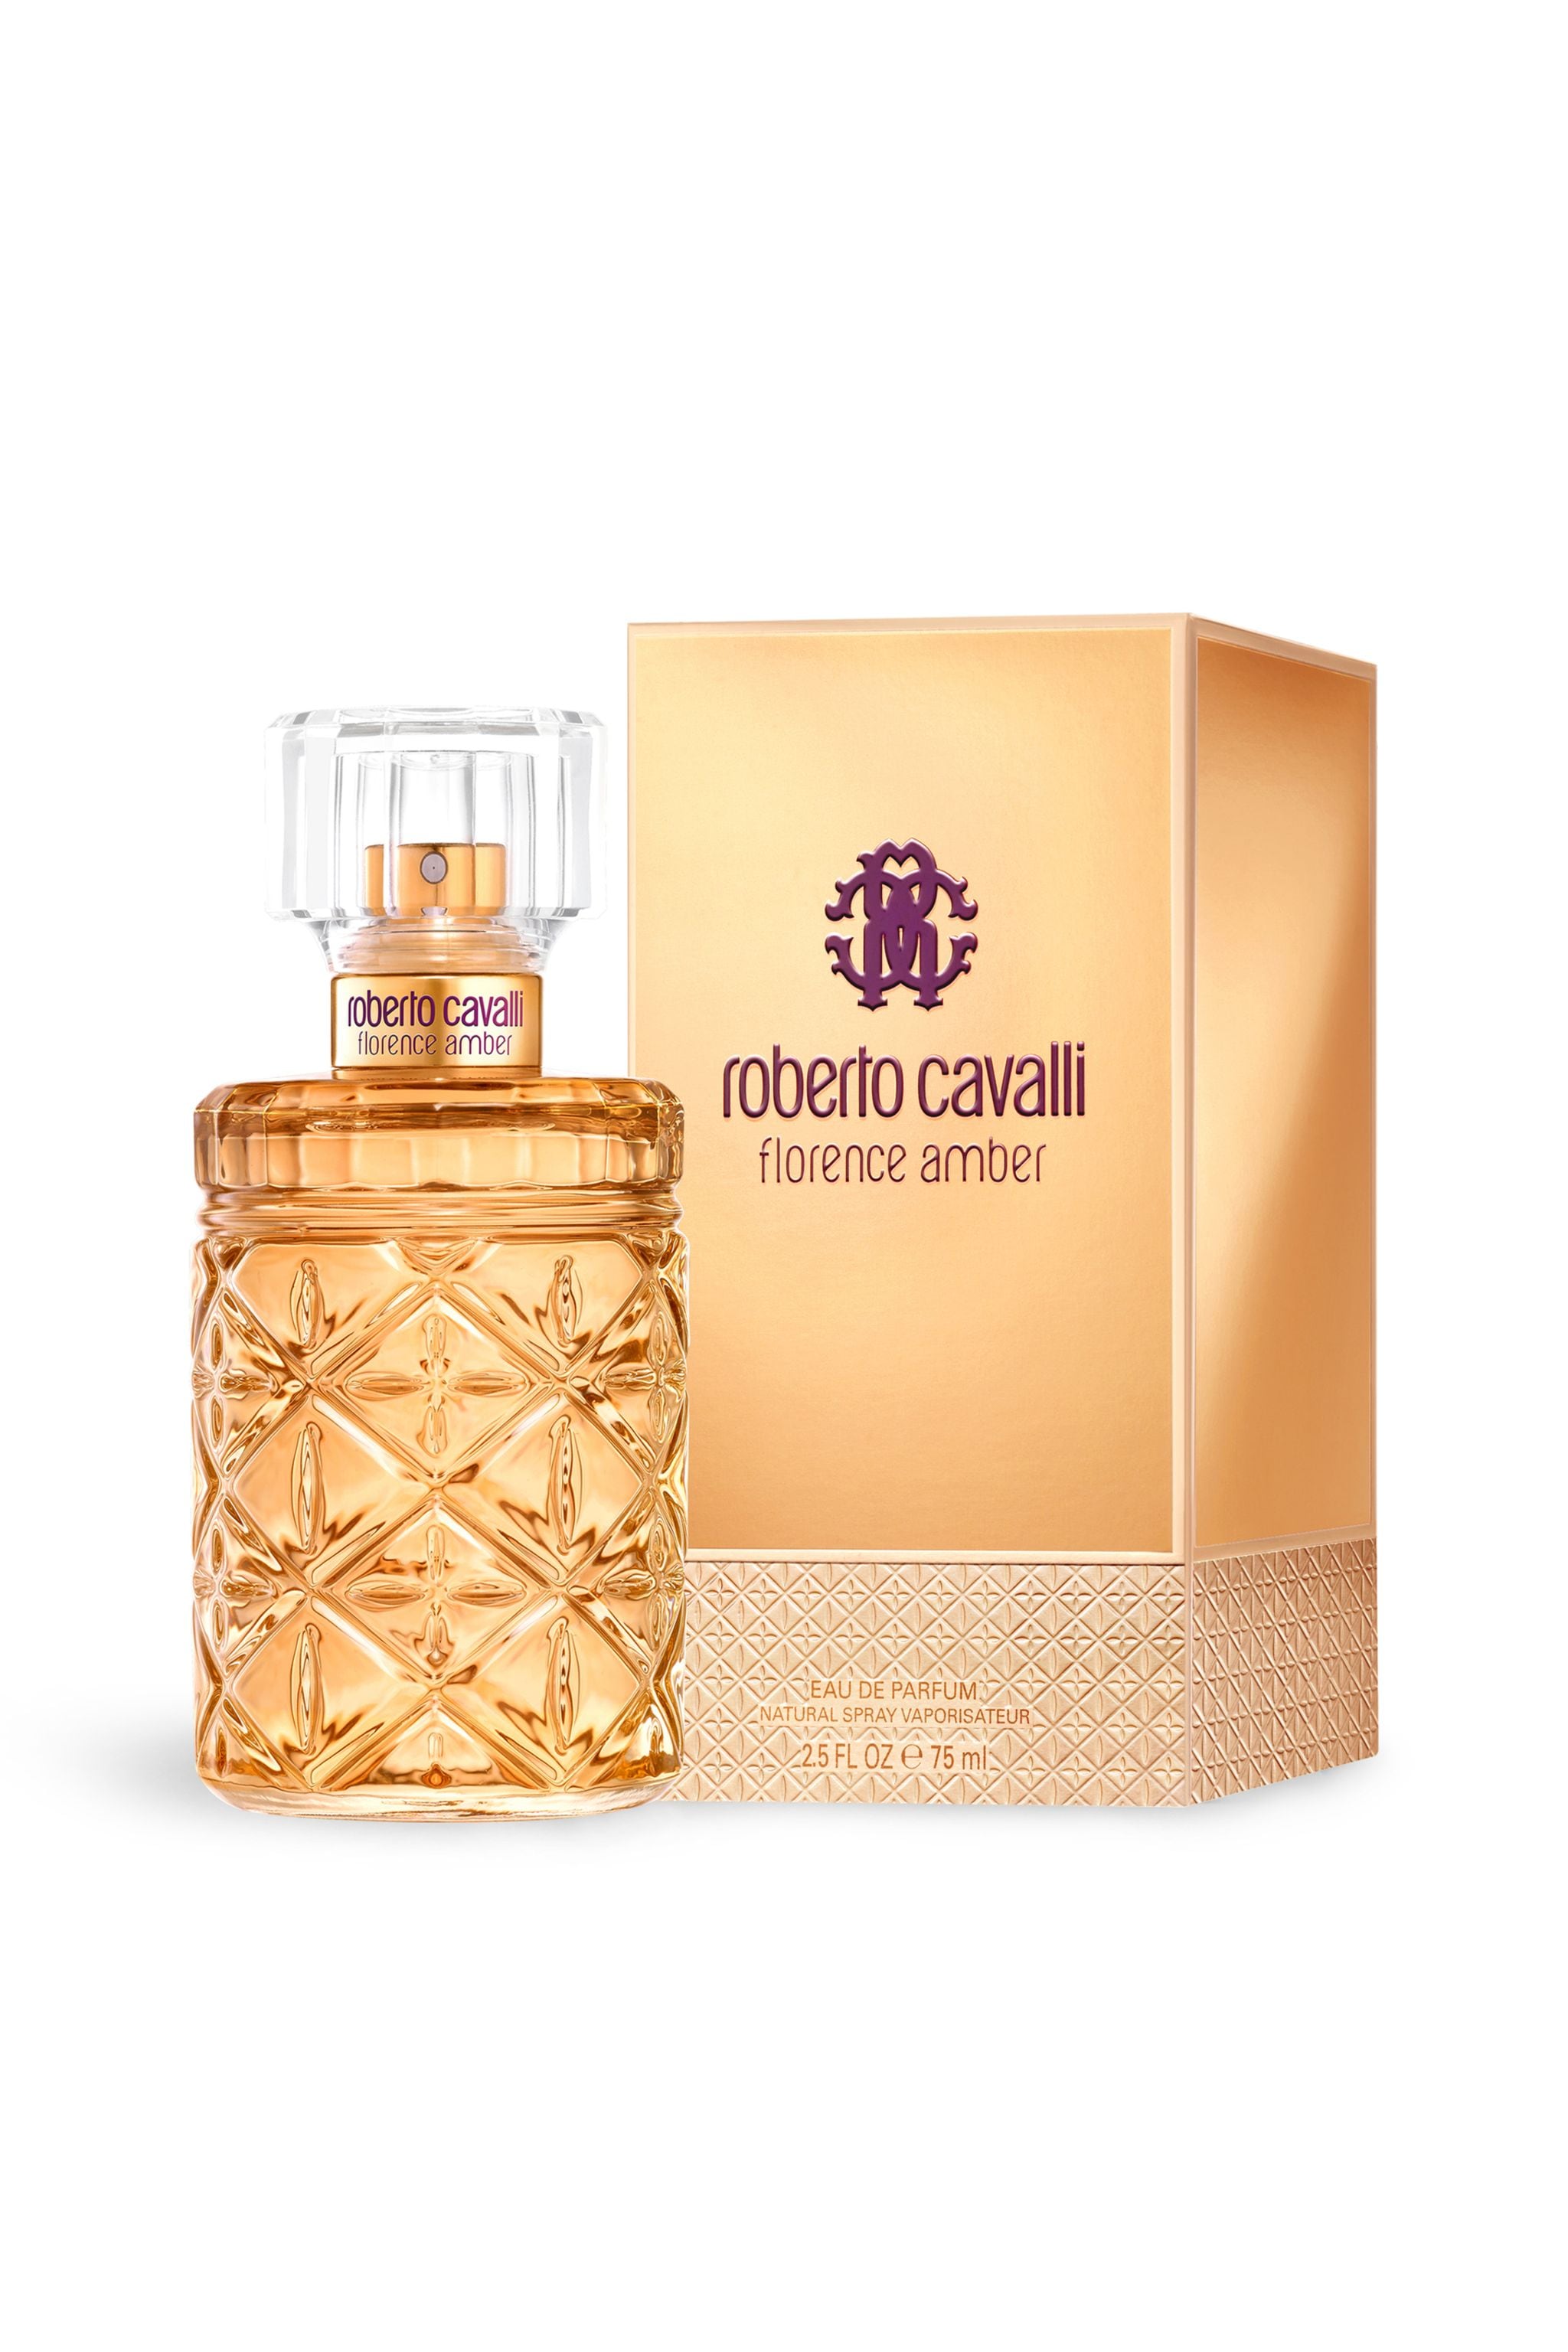 Florence Amber eau de parfum 75ml | Roberto Cavalli Fragrance